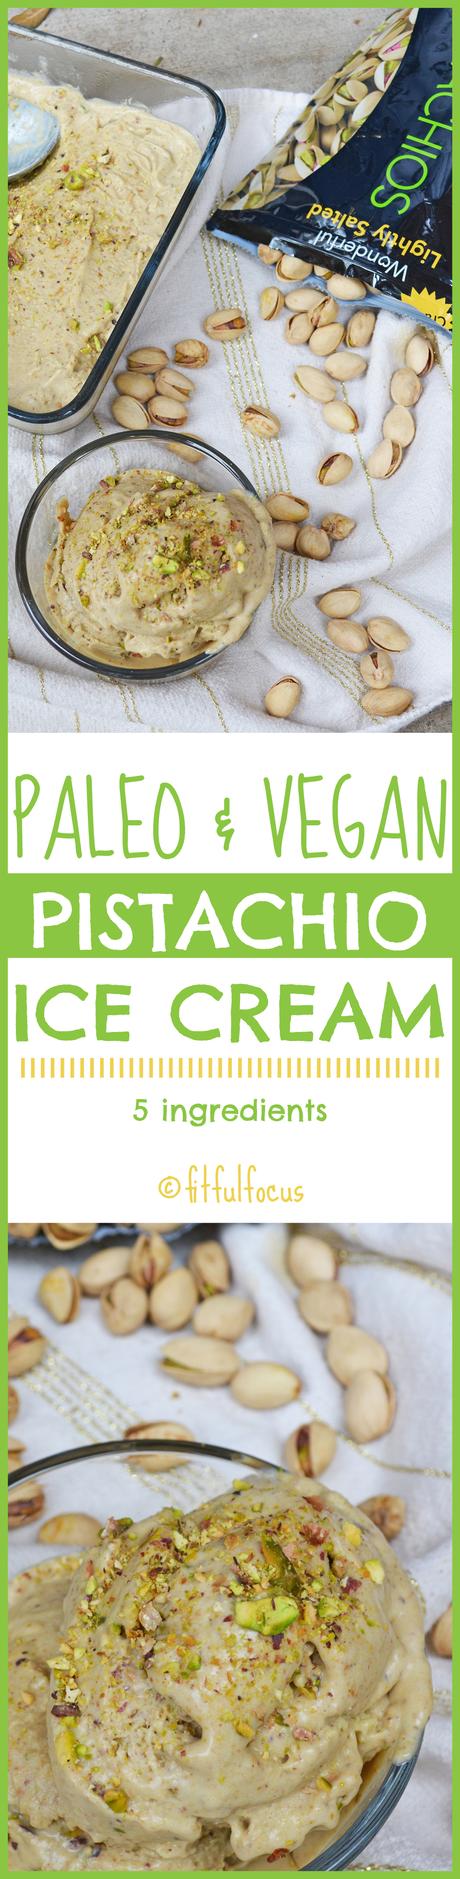 Paleo & Vegan Pistachio Ice Cream (5 Ingredients!)